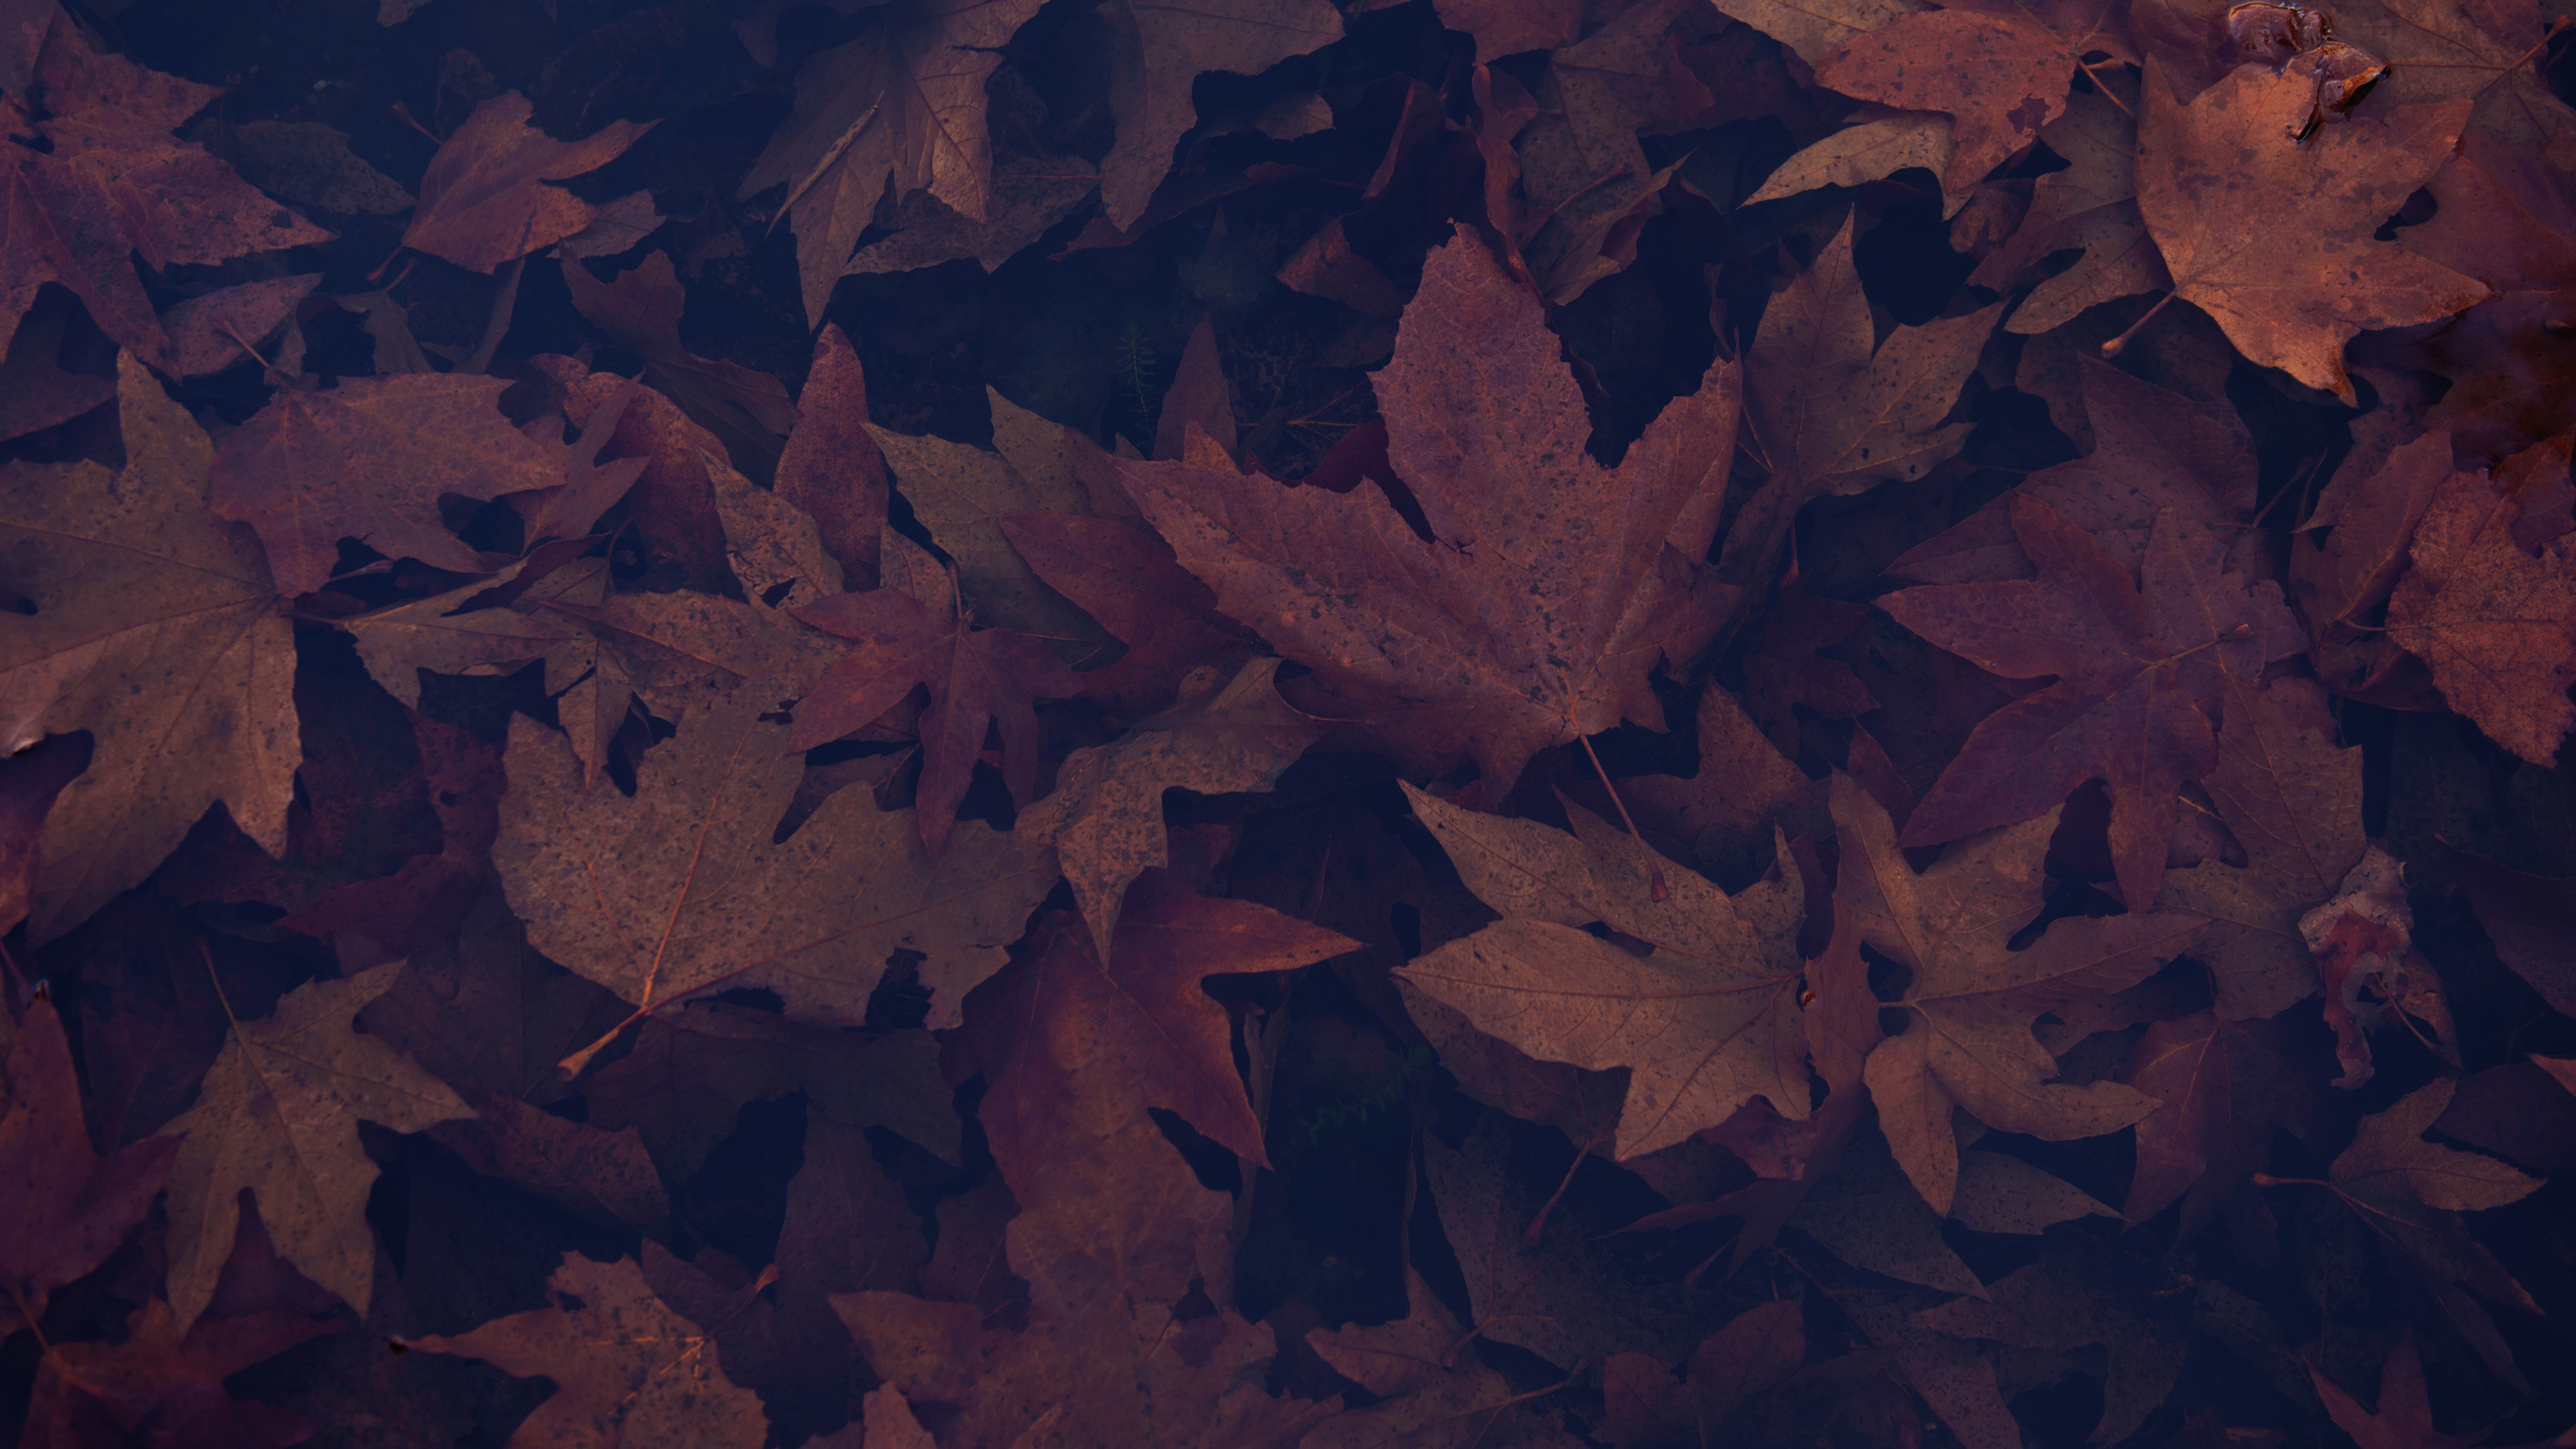 Download 3840x2160 dark, portrait, maple leaves, autumn 4k wallpaper, uhd wallpaper, 16:9 widescreen wallpaper, 3840x2160 HD image, background, 17858